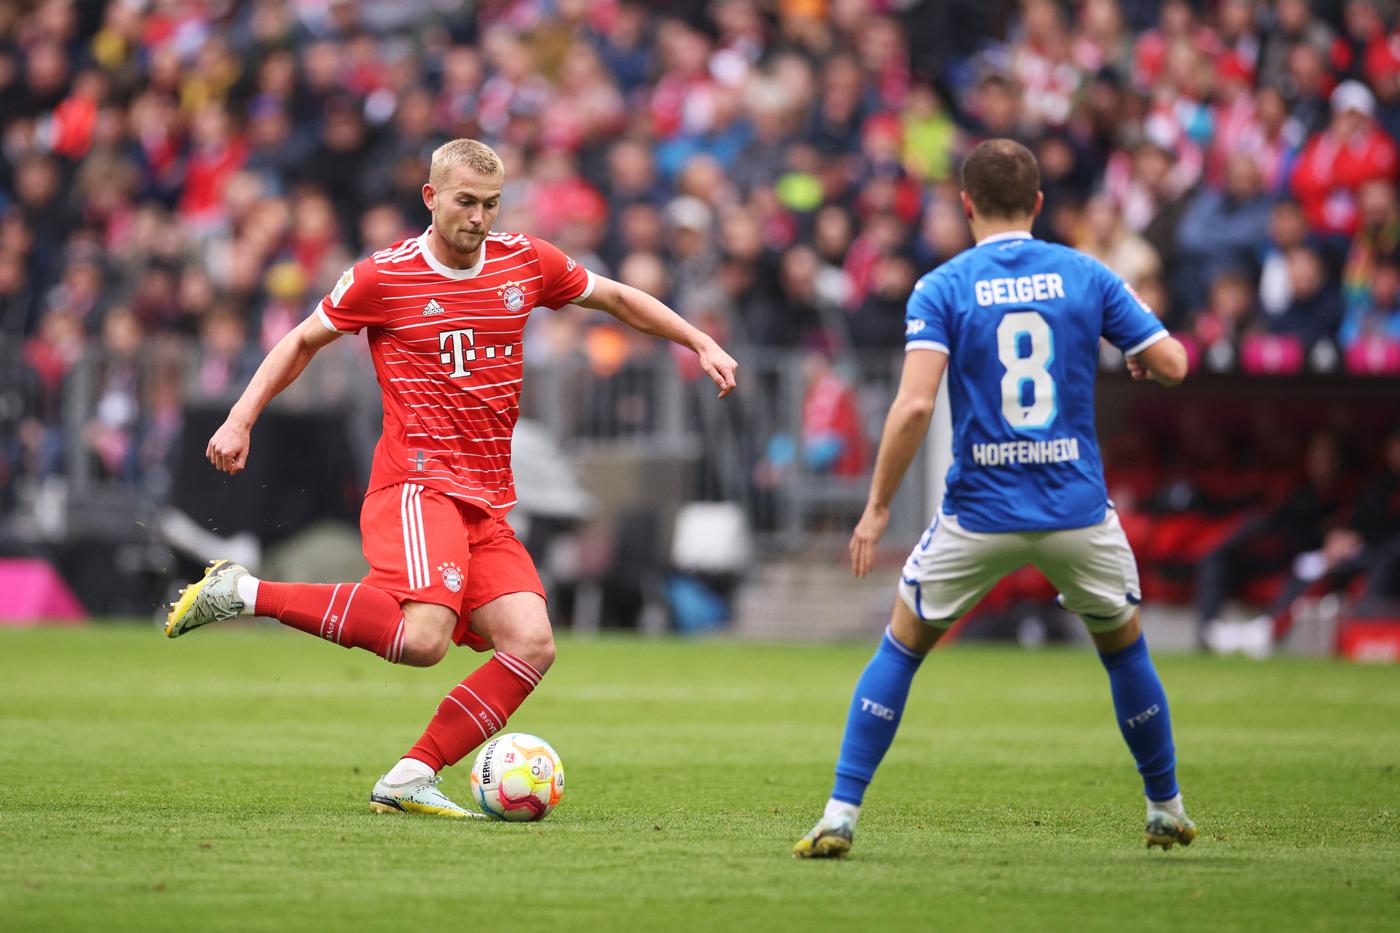 Bayern - Hoffenheim - 1:1. German Championship, 28th round. Match review, statistics